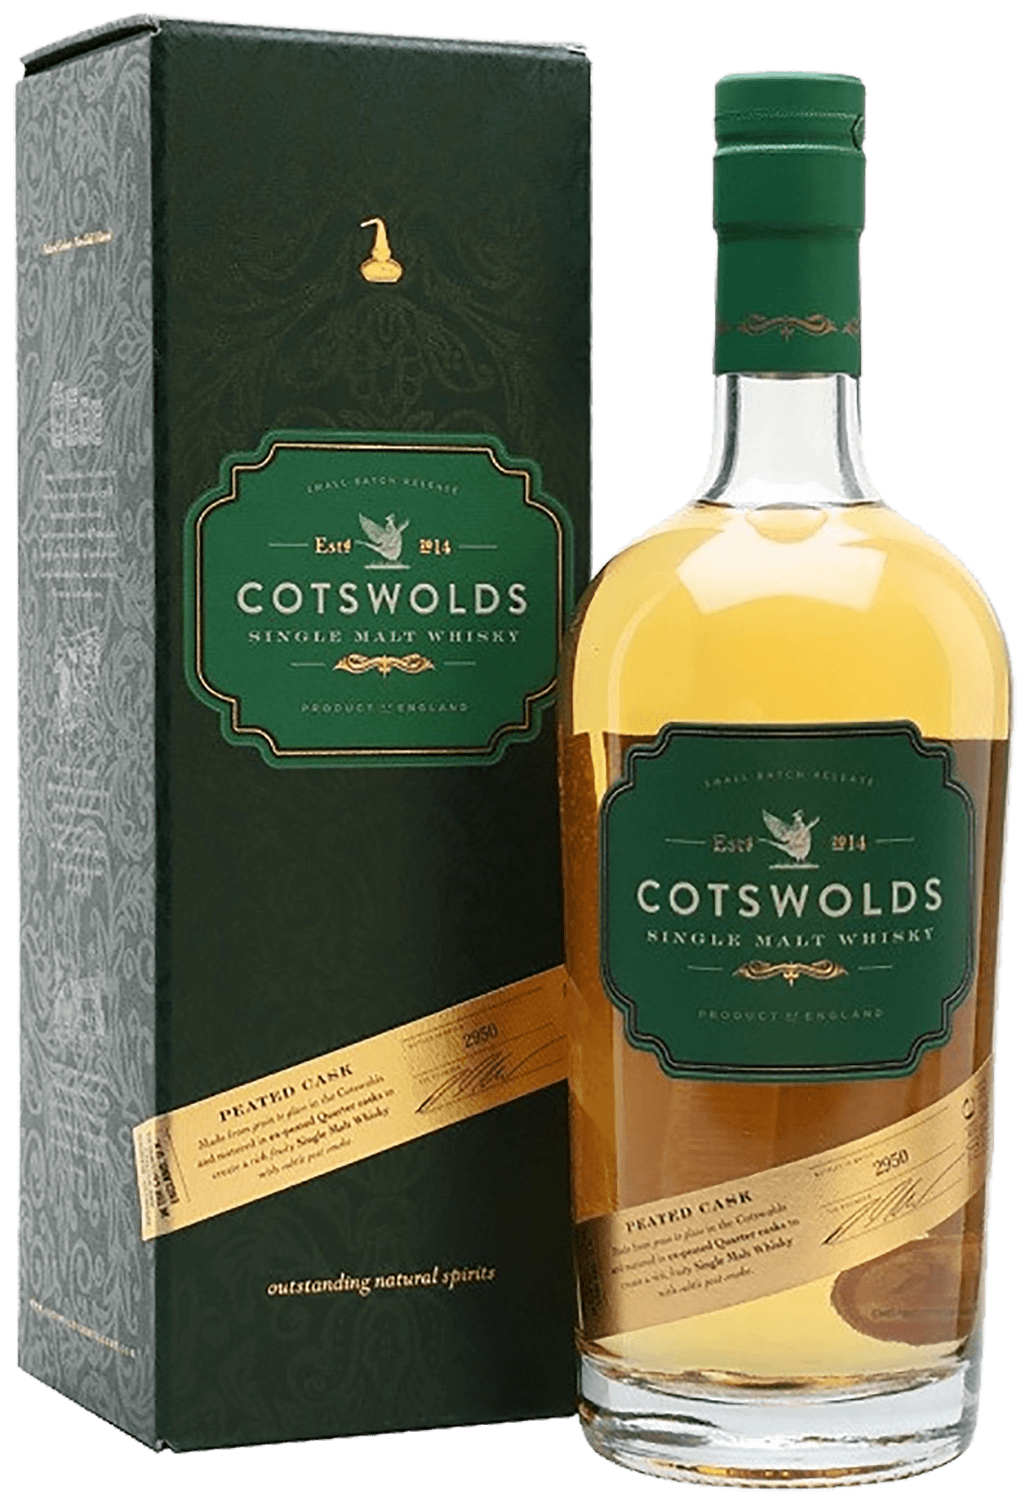 Cotswolds Peated Cask Single Malt Whisky west cork glengarriff series bog oak charred cask single malt irish whiskey